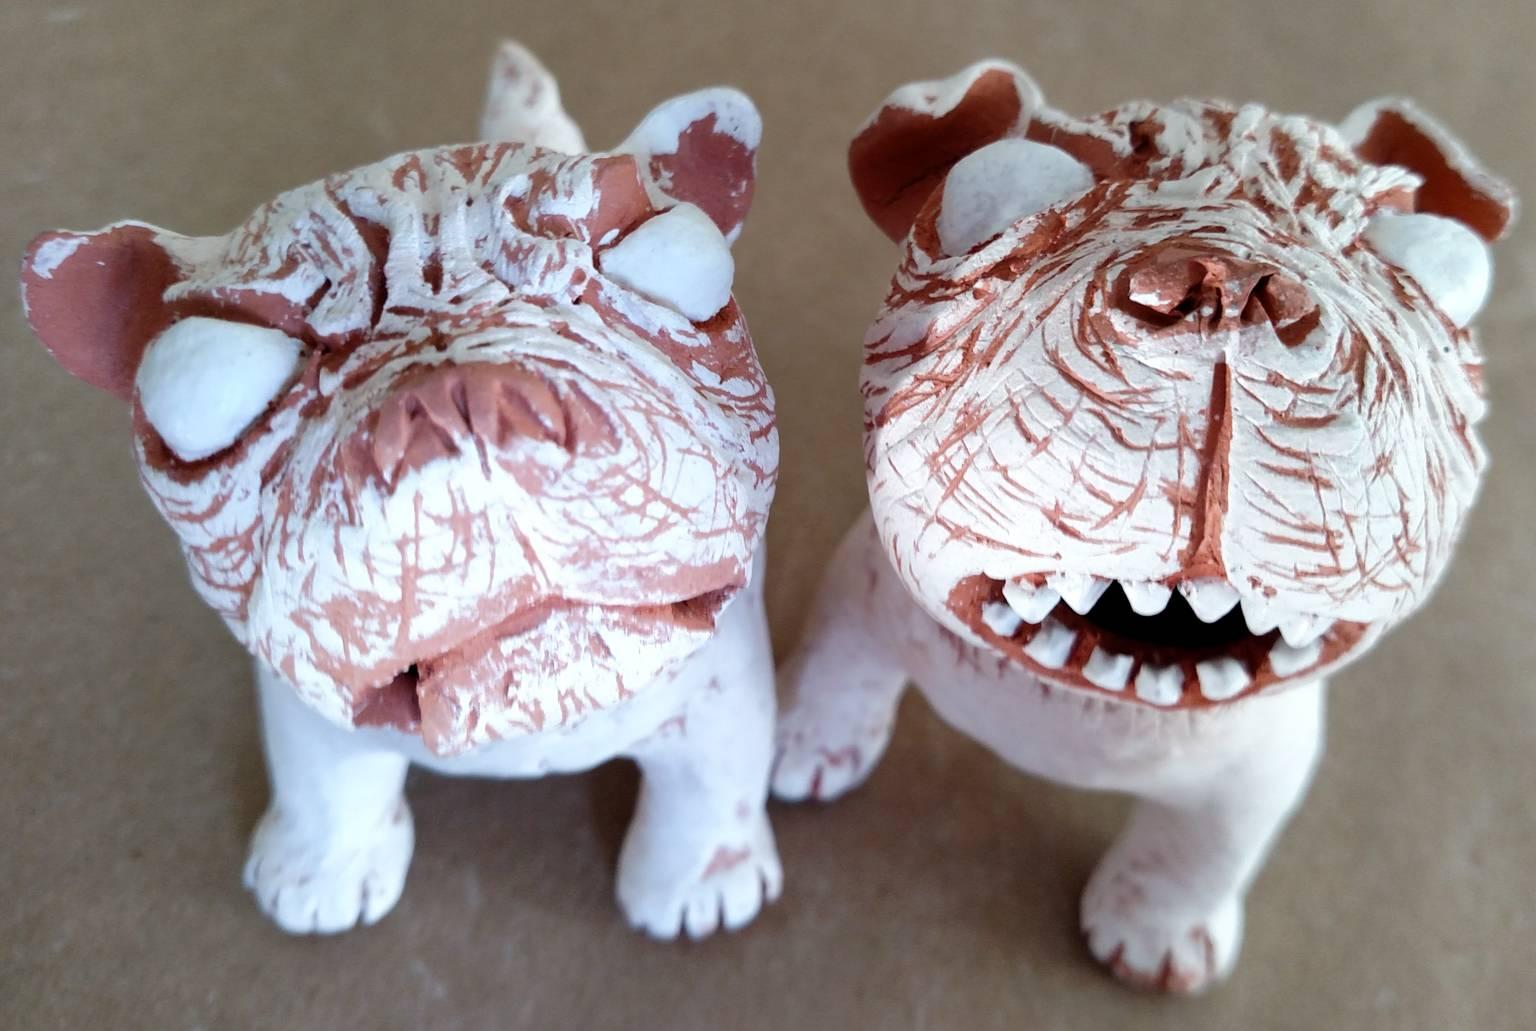 Guardian Dogs (Small) - Sculpture by Kenjiro Kitade